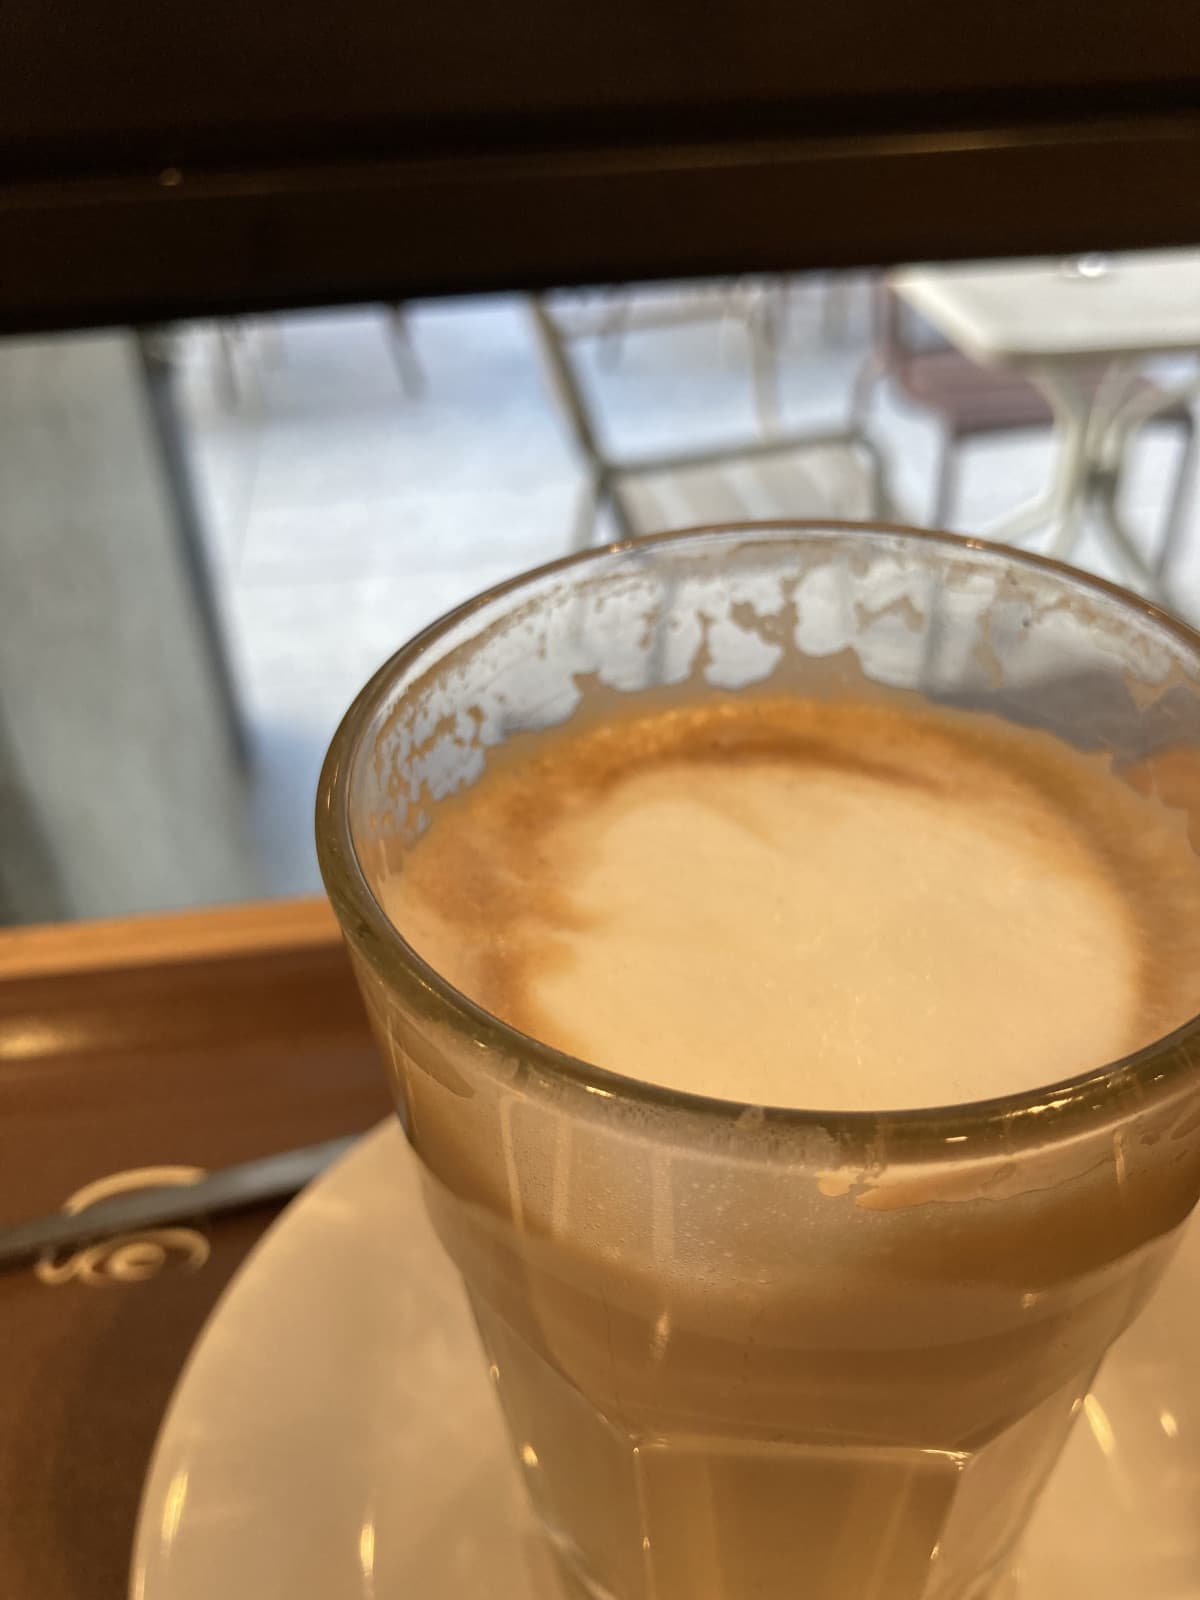 Caffè latte + articoli scientifici di prima mattina è un must🌍^🌍